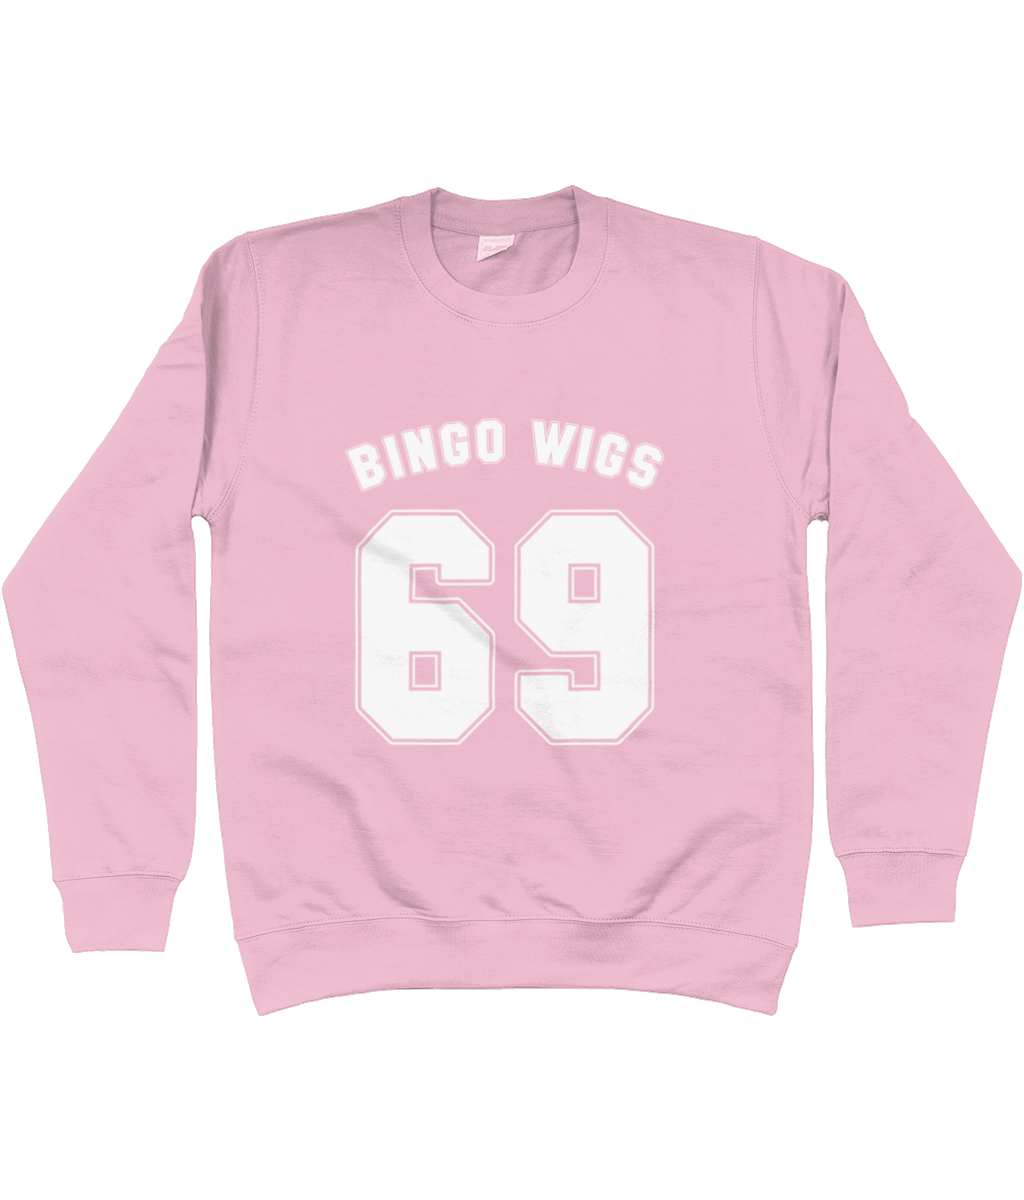 Bingo Wigs 69 Sweatshirt - SNATCHED MERCH